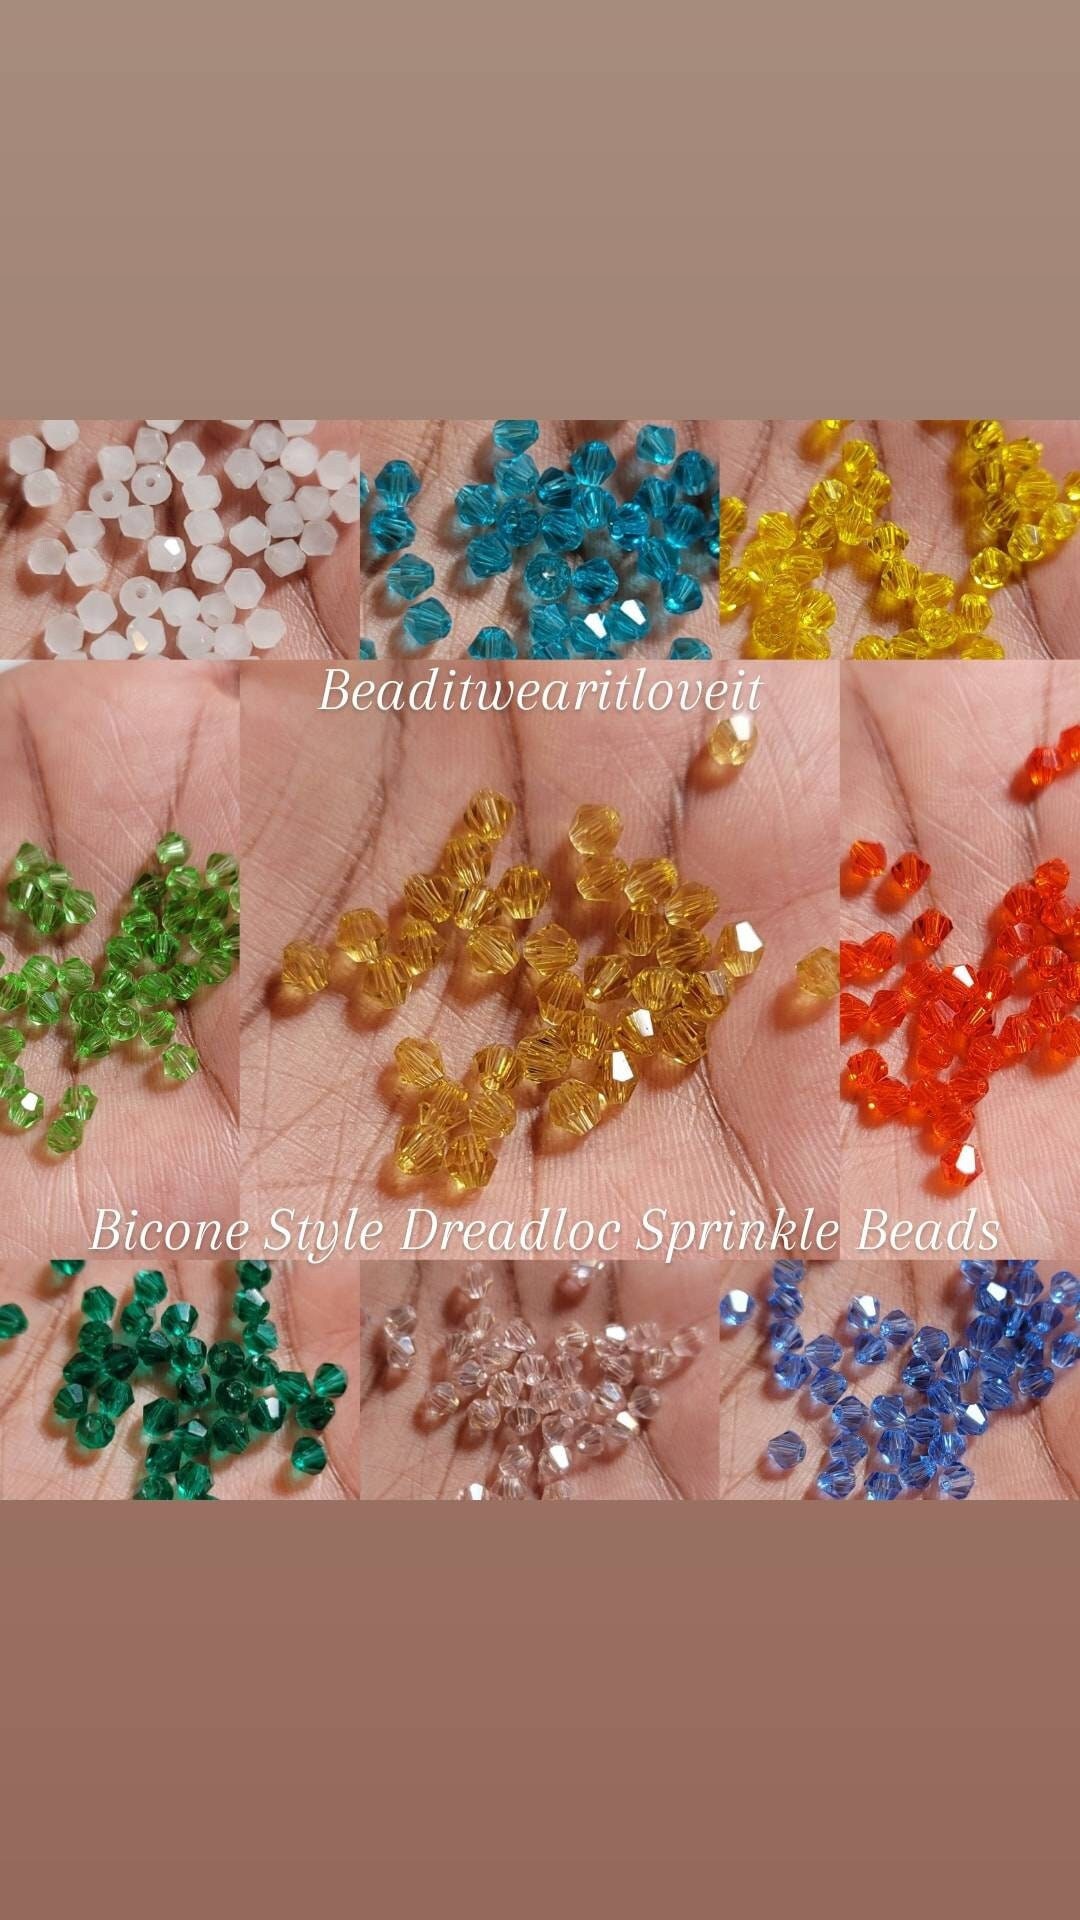 Peridot Crystal Loc Sprinkle Beads, Braid Jewelry Dreadlock